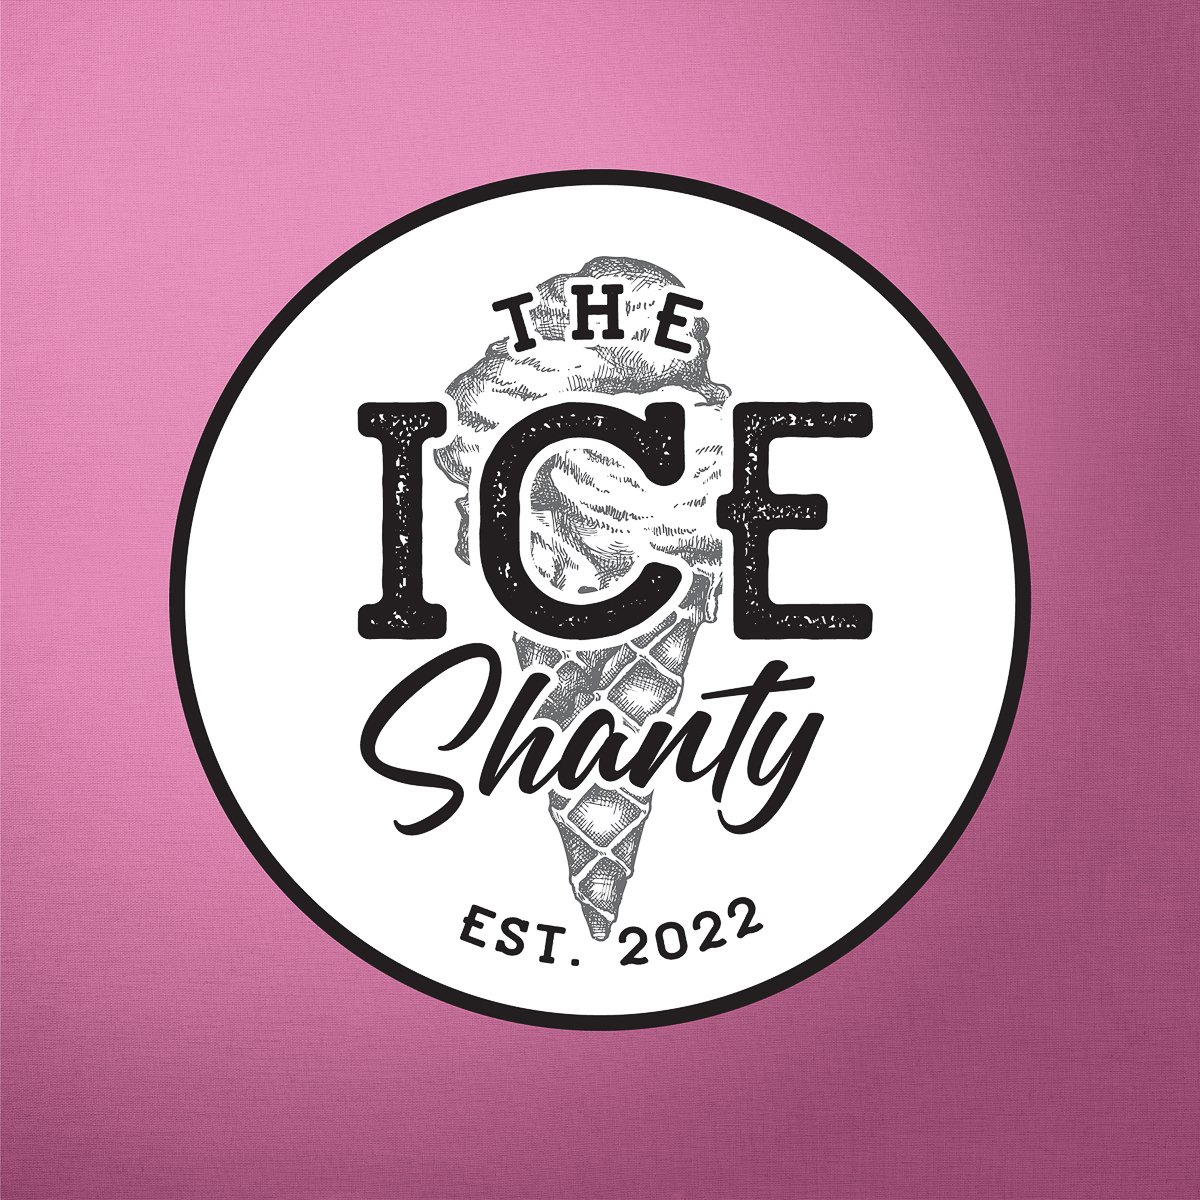 82_ice_shanty_logo.jpg